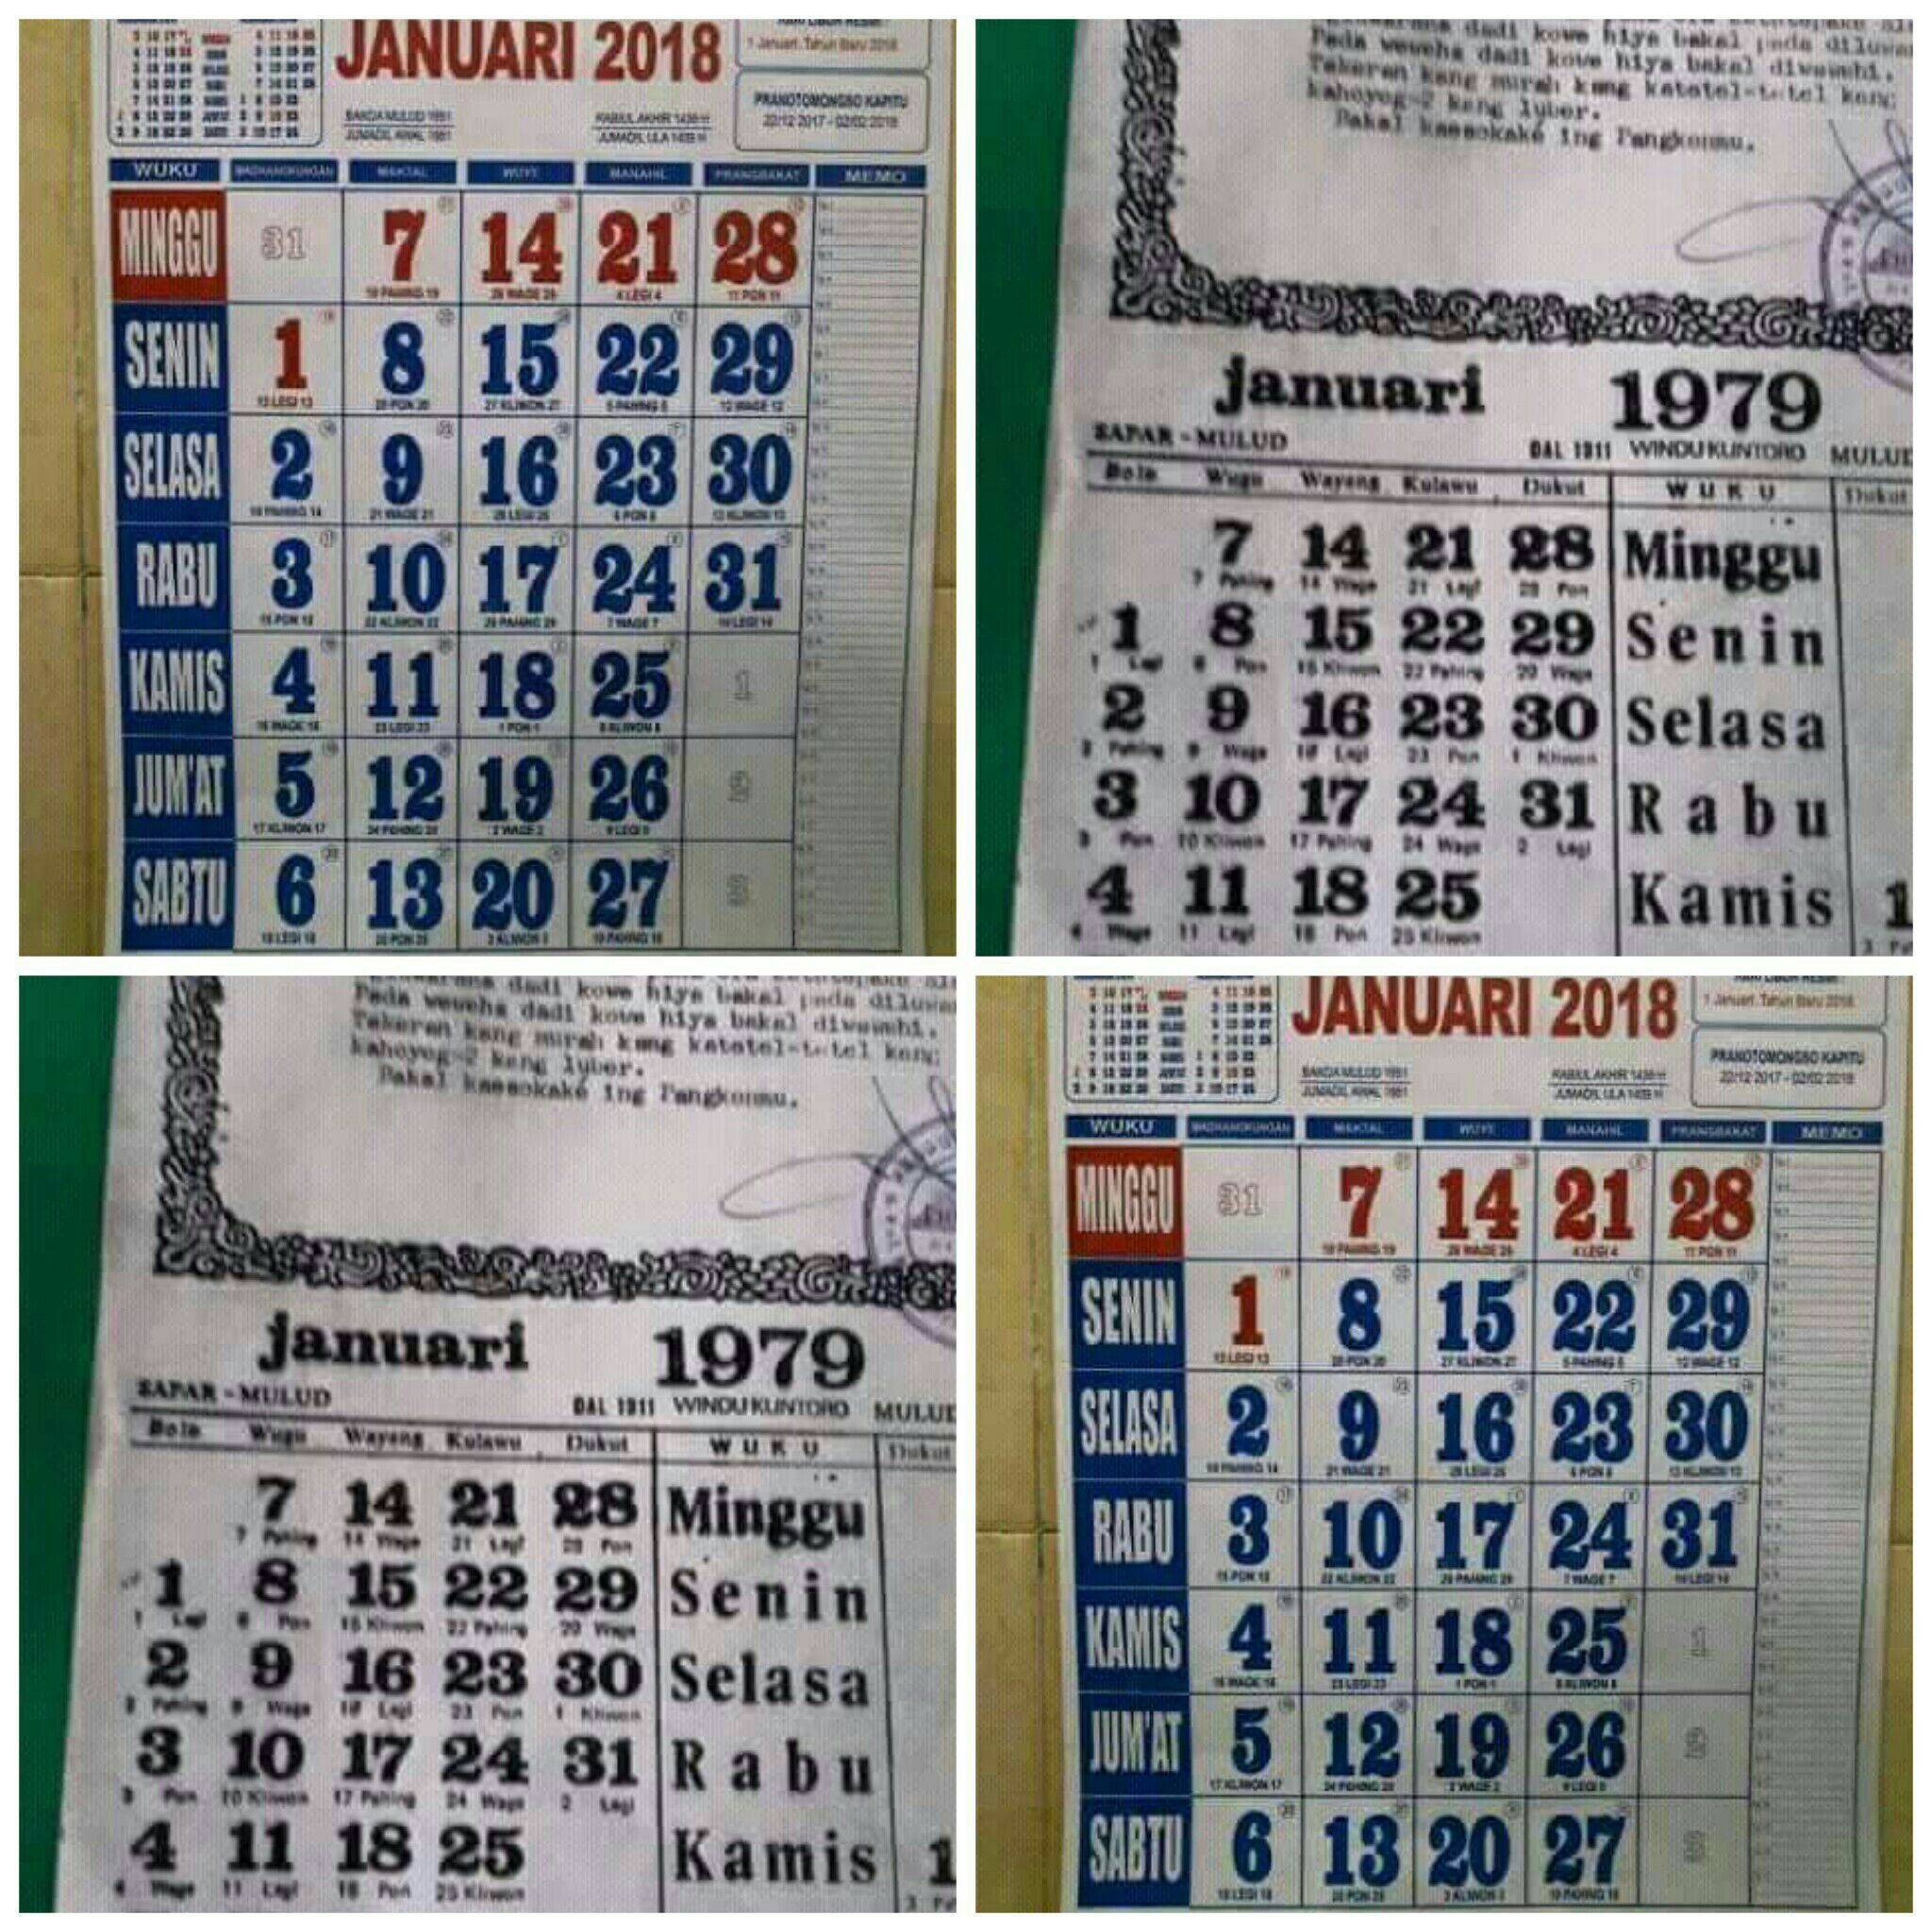 Heboh Kalender 2018 Sama Dengan Tahun 1979, Ternyata Ini ..

